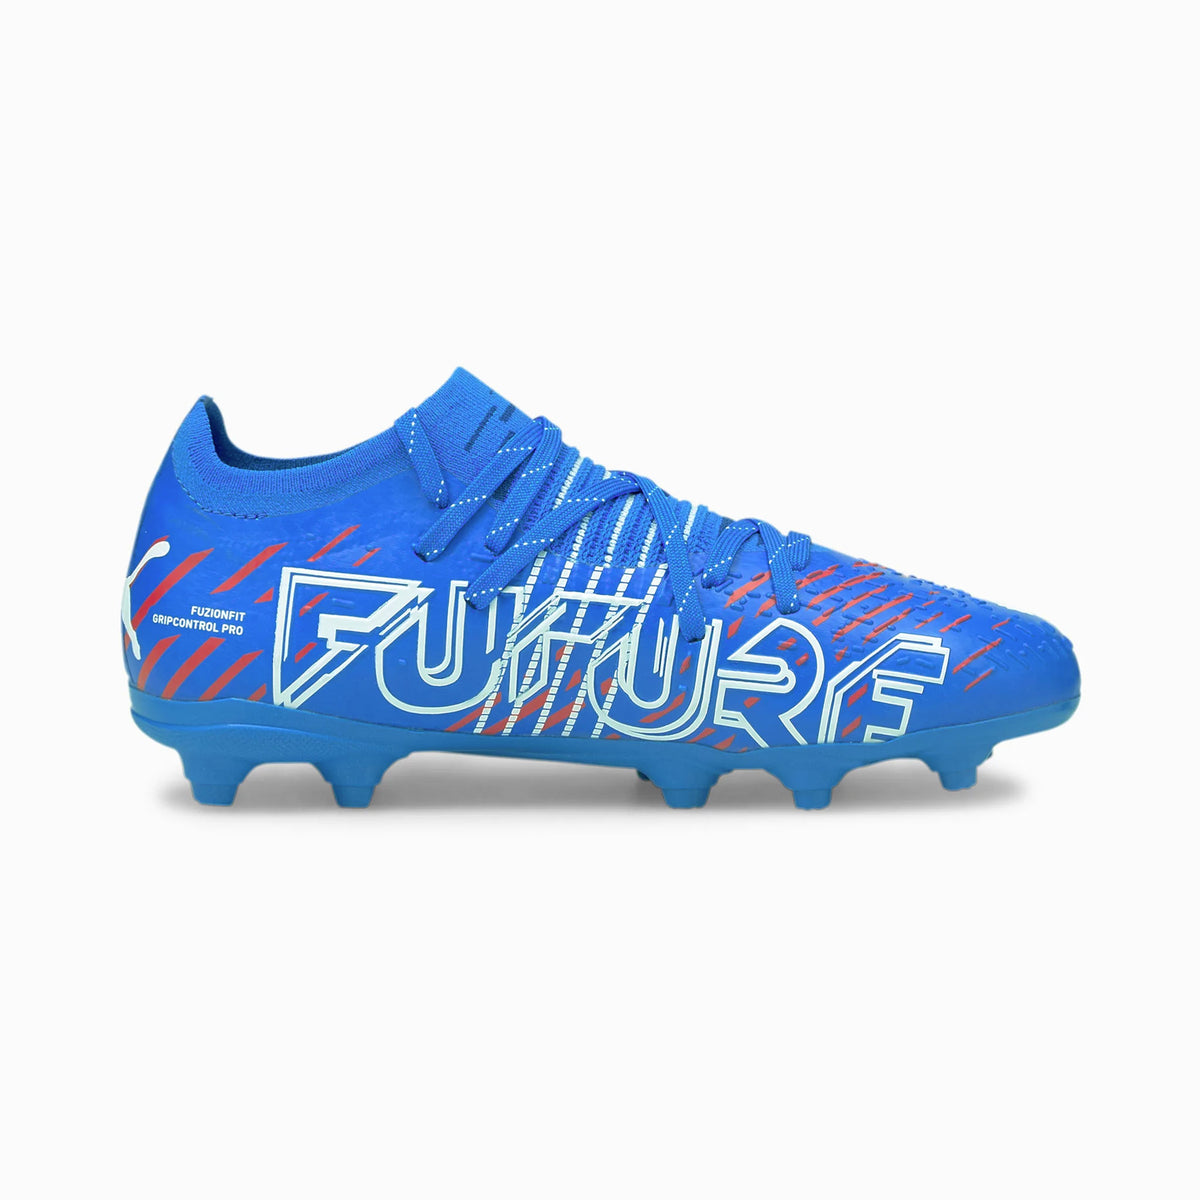 Puma Future Z 3.2 FG Chaussures de soccer à crampons junior côté